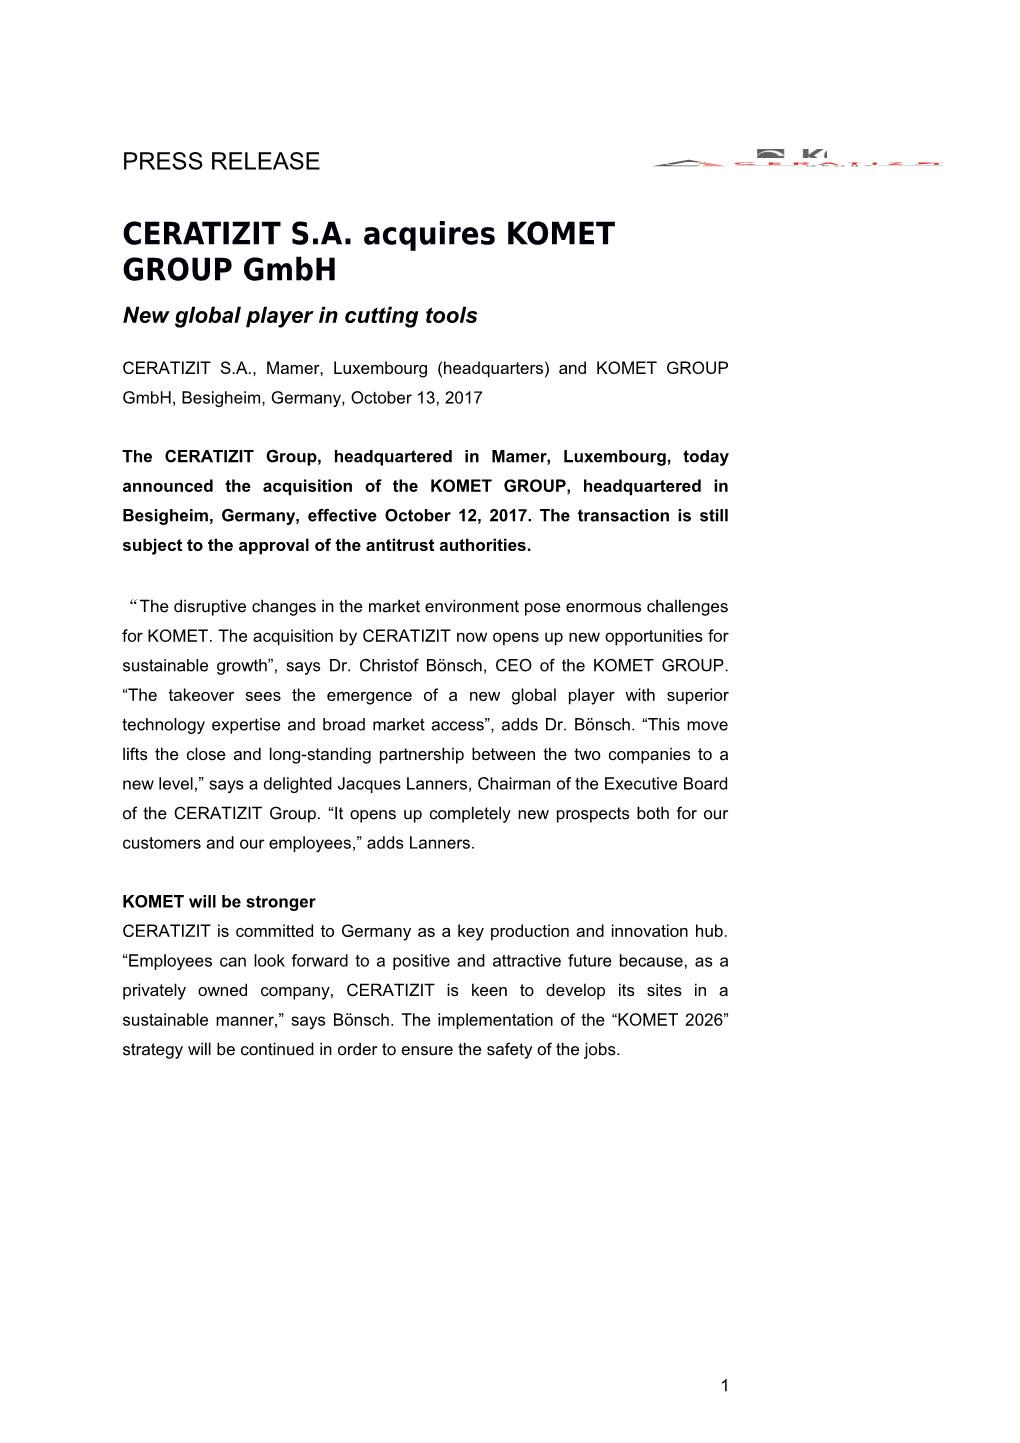 CERATIZIT S.A. Acquires KOMET GROUP Gmbh